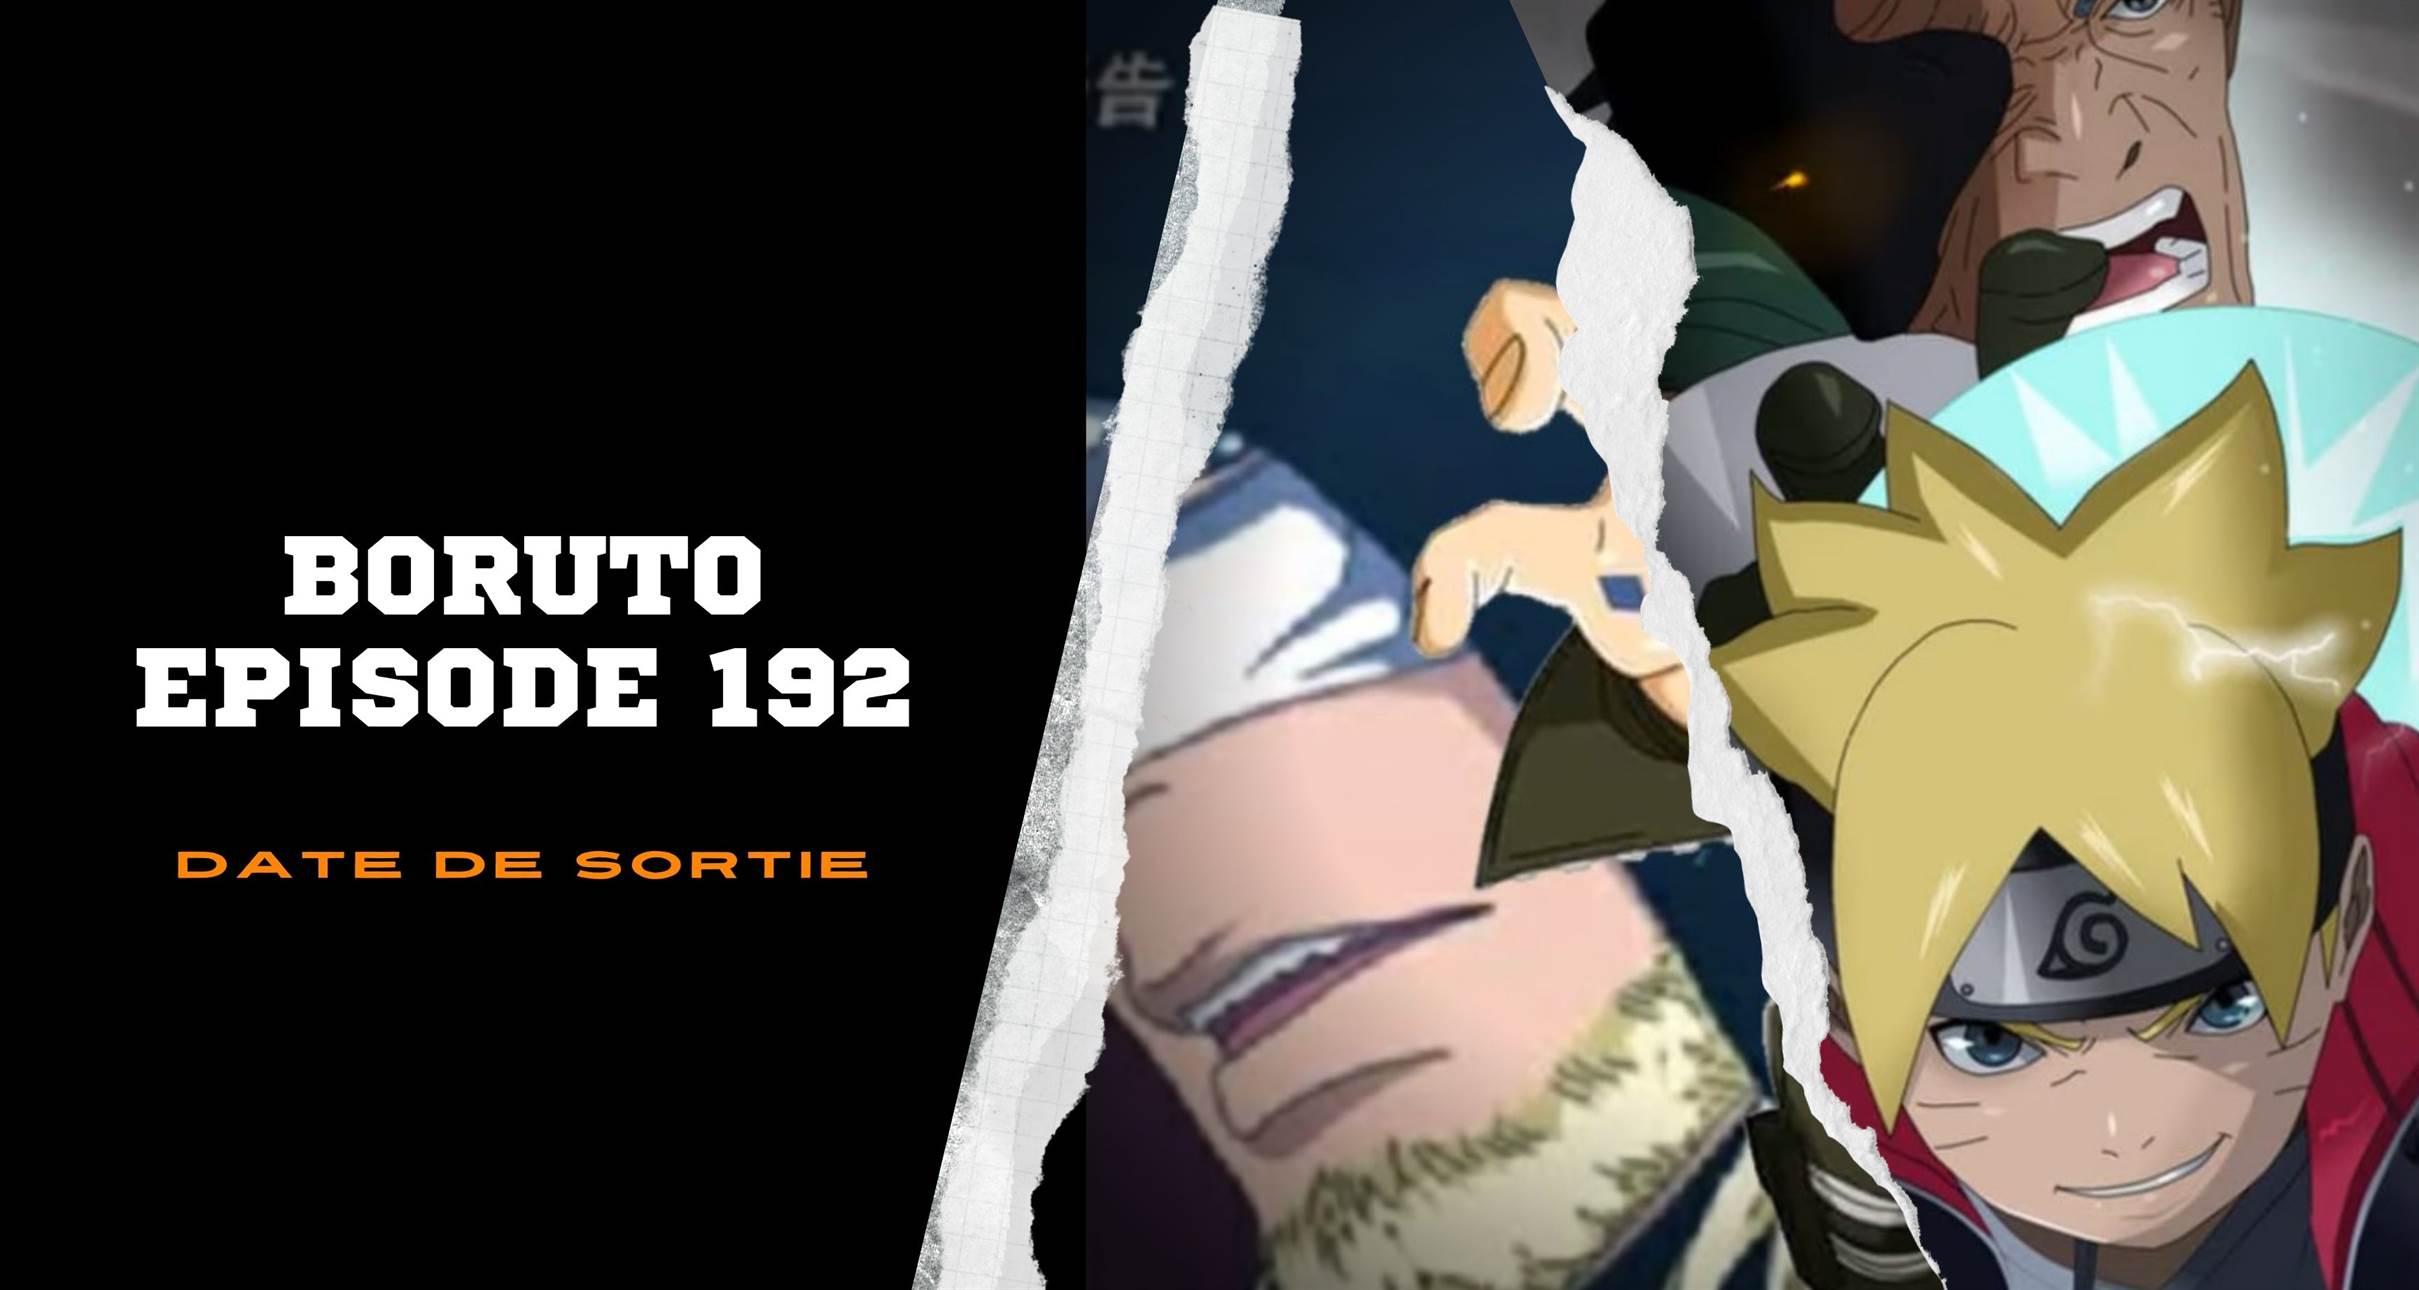 Boruto Episode 192 date